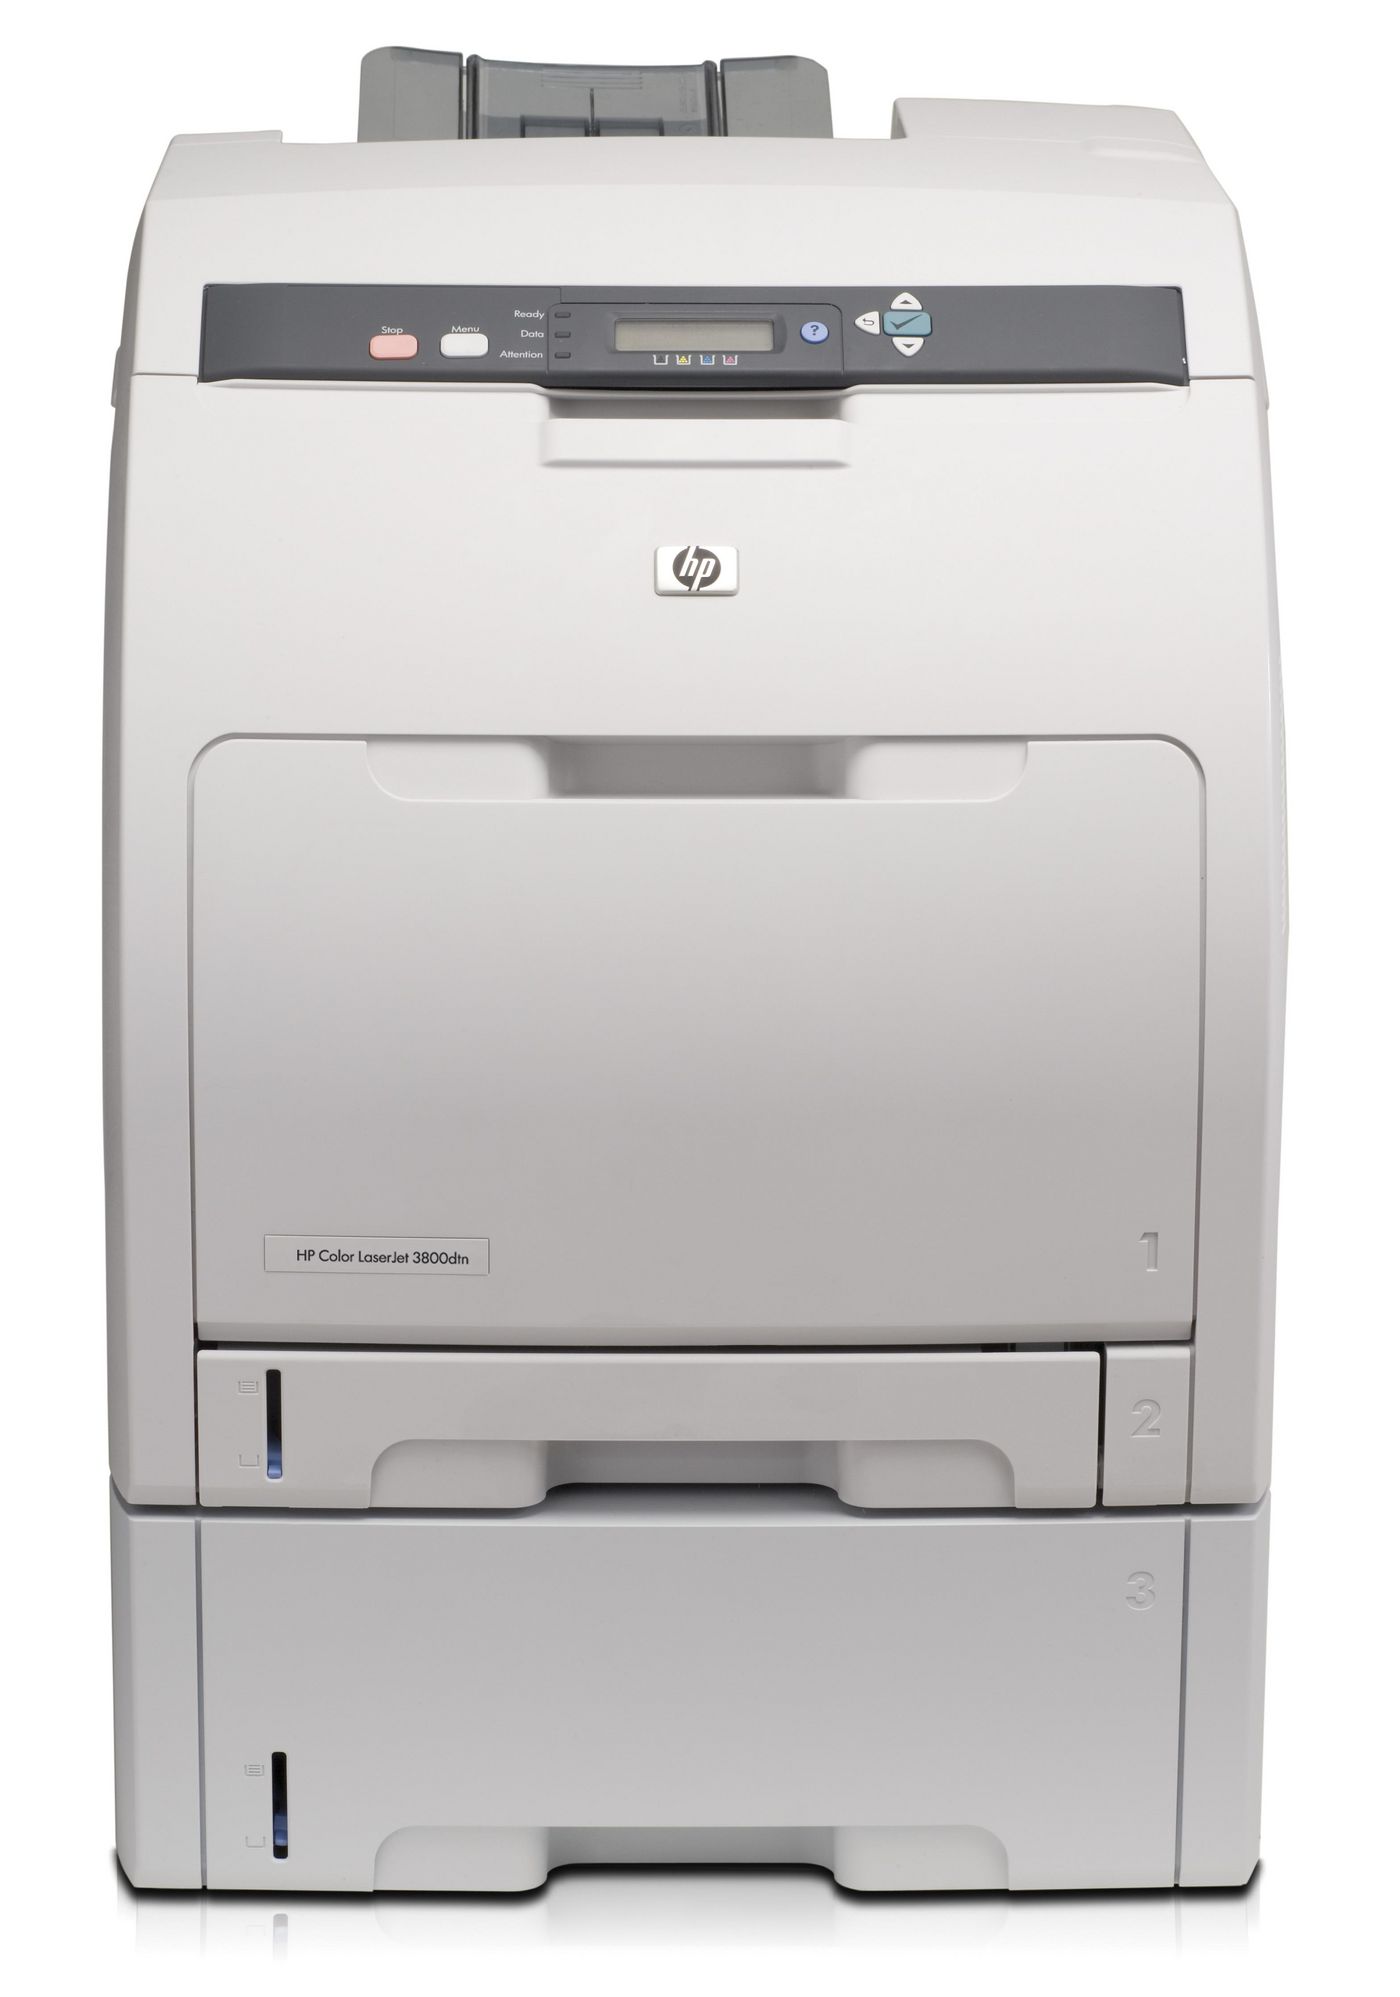 HP Q5984A-RFB Color LaserJet 3800dtn Printer 